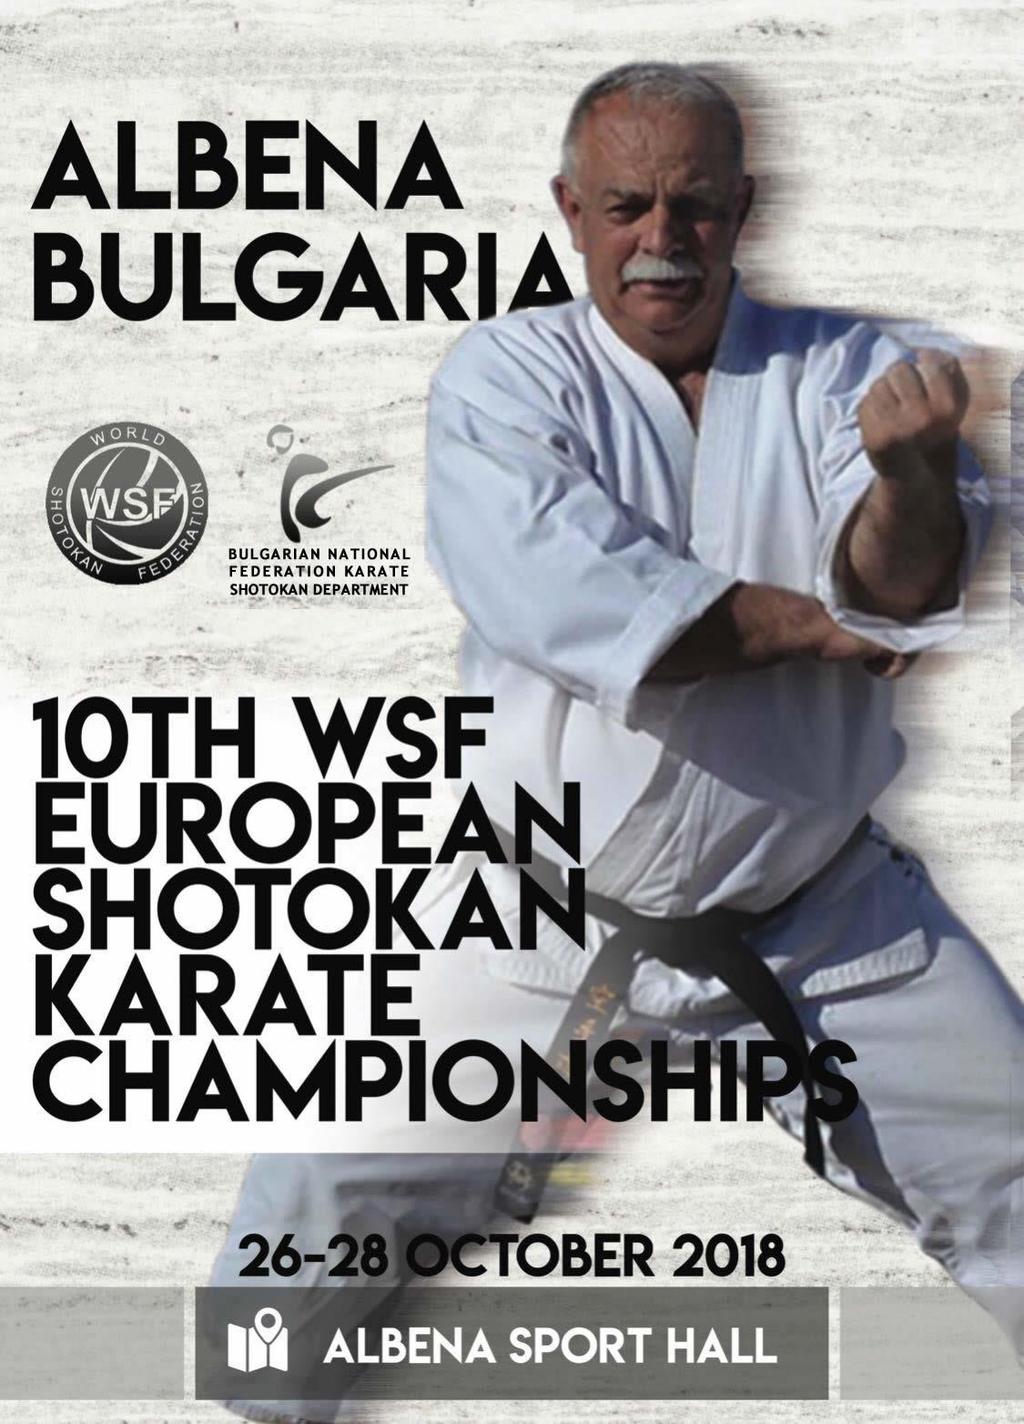 0 ORGANISATION World Shotokan Federation (WSF) Bulgarian